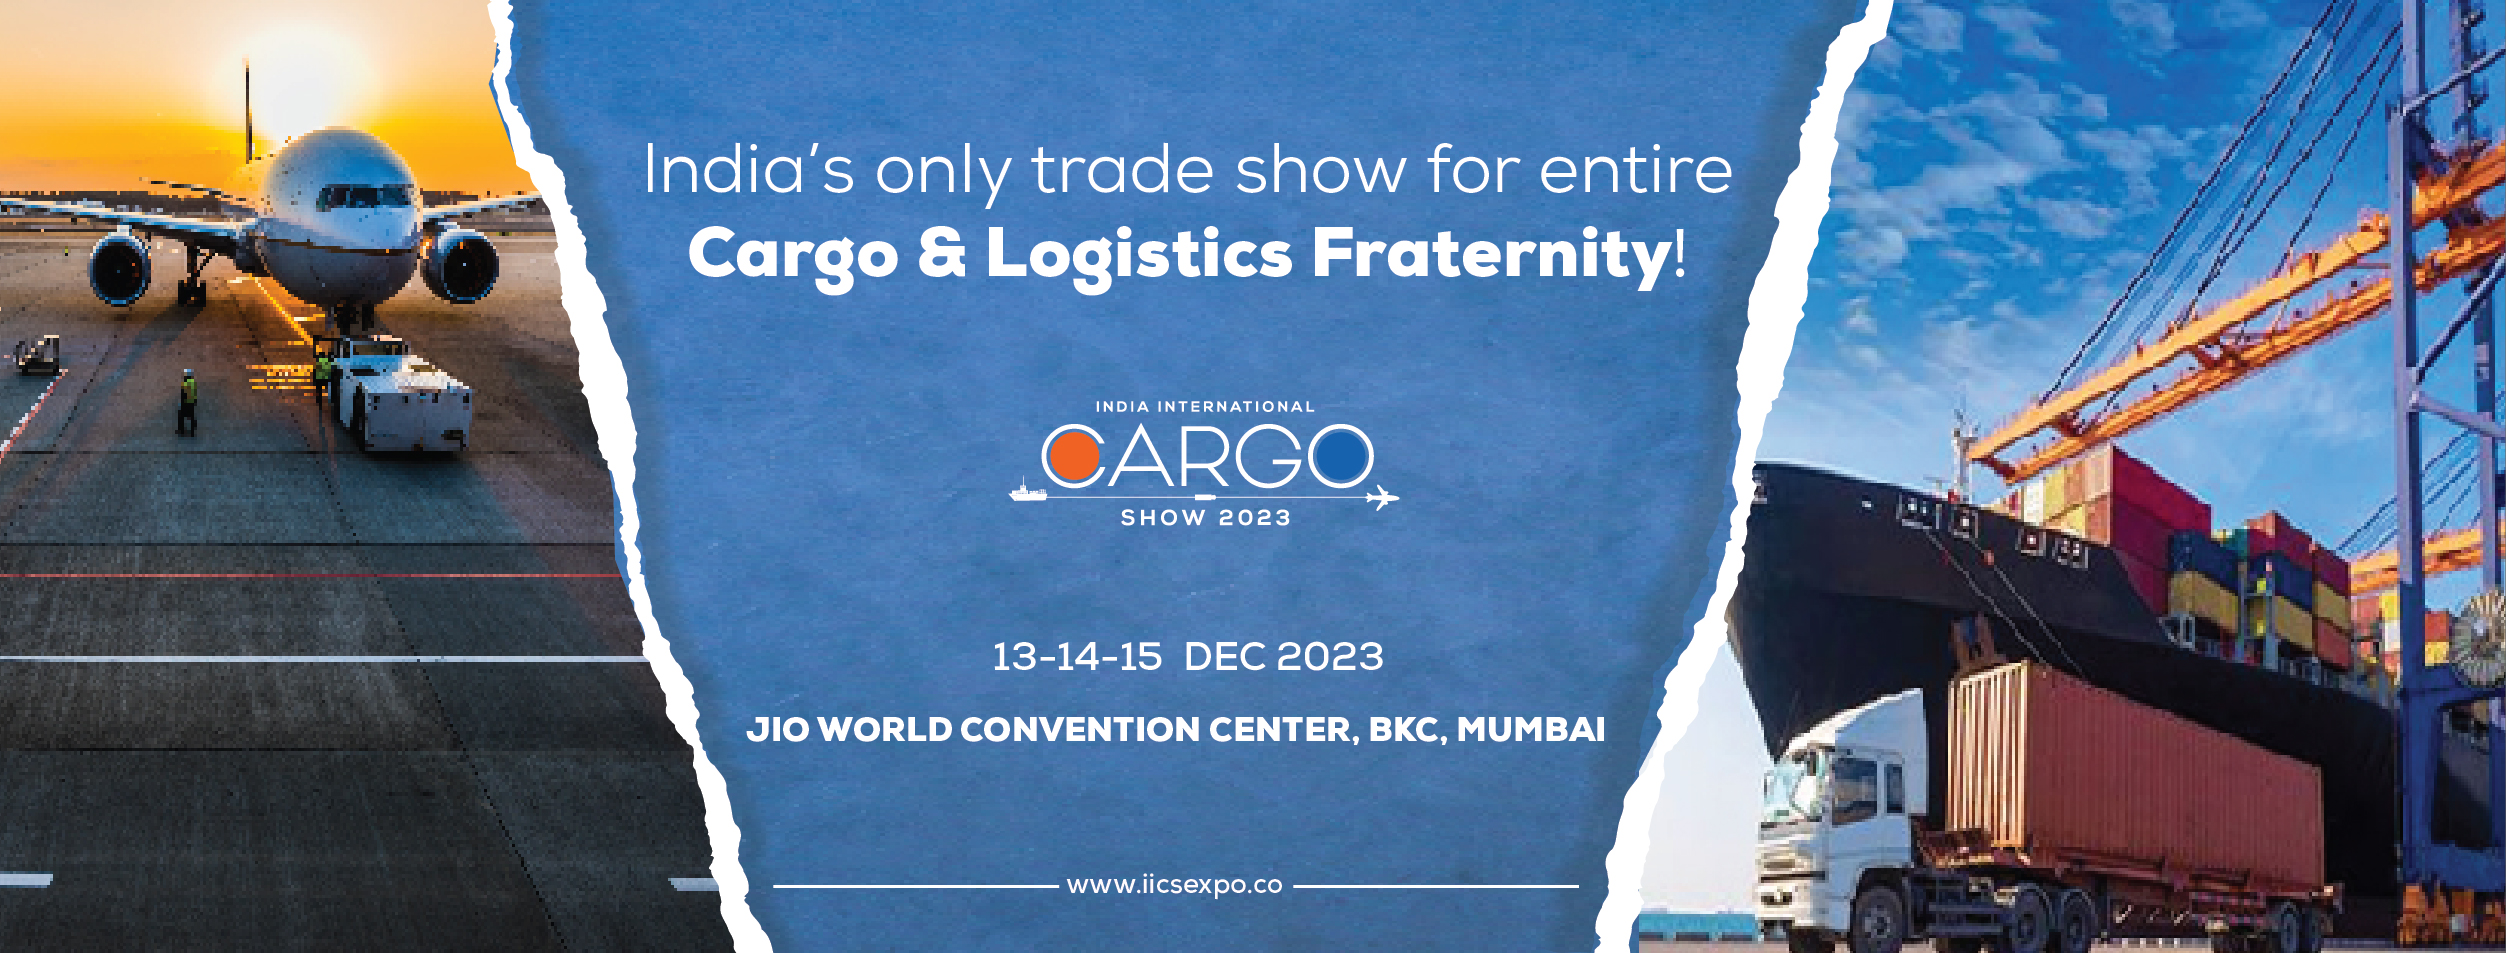 India International Cargo Show - IICS, Mumbai, Maharashtra, India